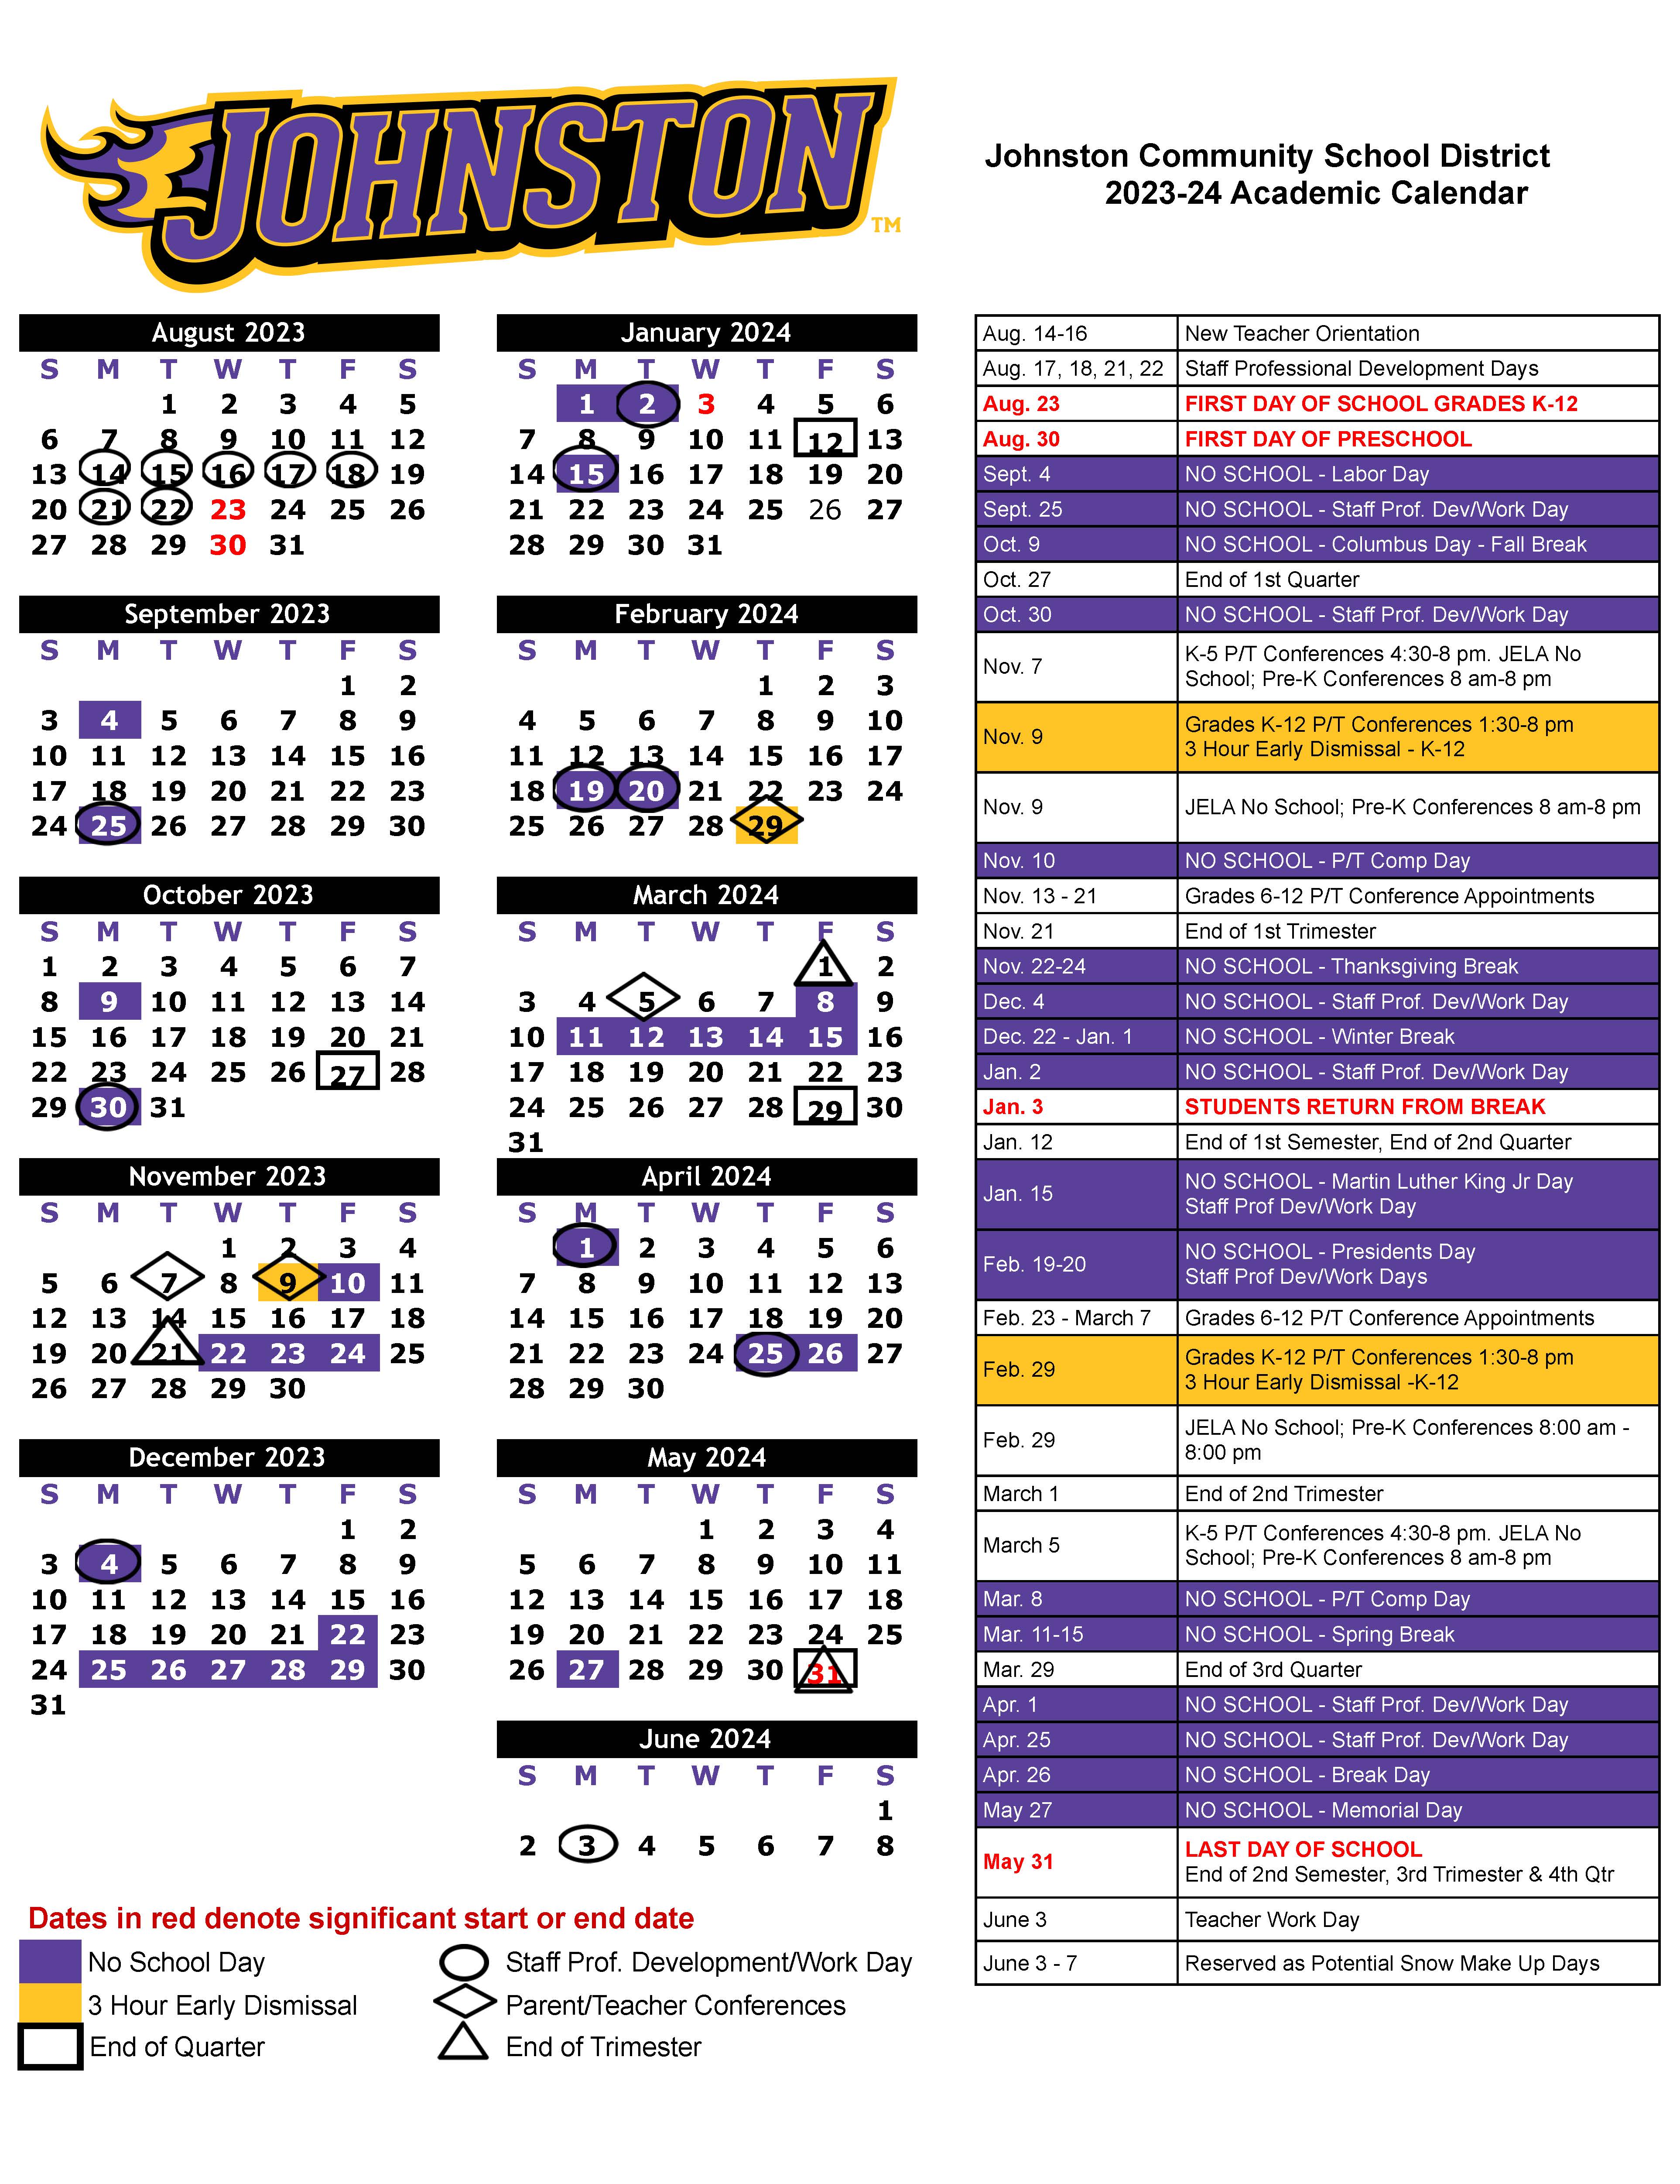 Johnston Community School District Calendar 2024